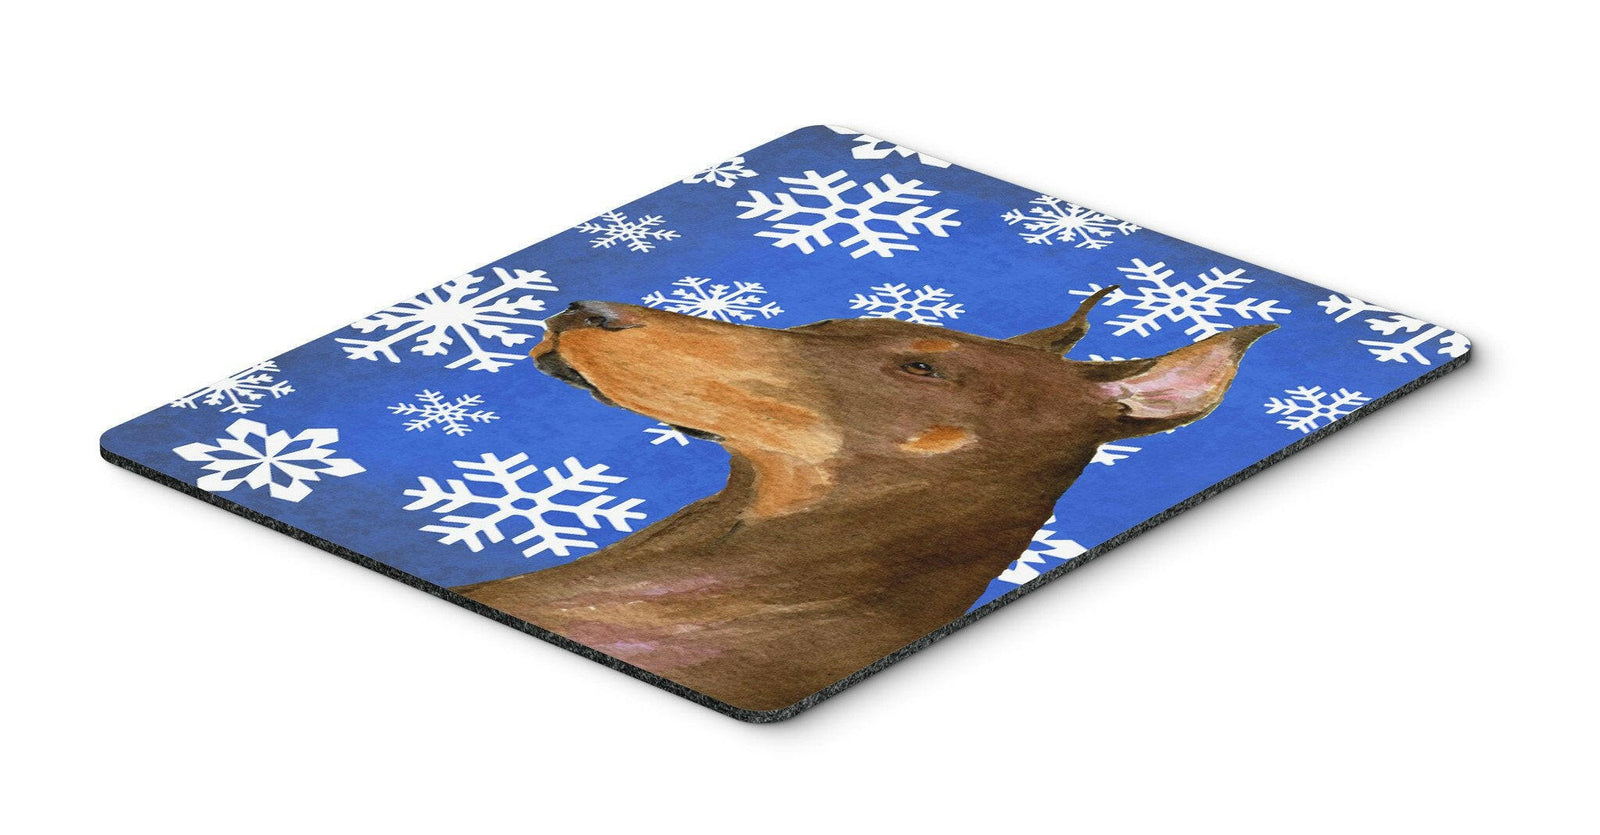 Doberman Winter Snowflakes Holiday Mouse Pad, Hot Pad or Trivet by Caroline's Treasures